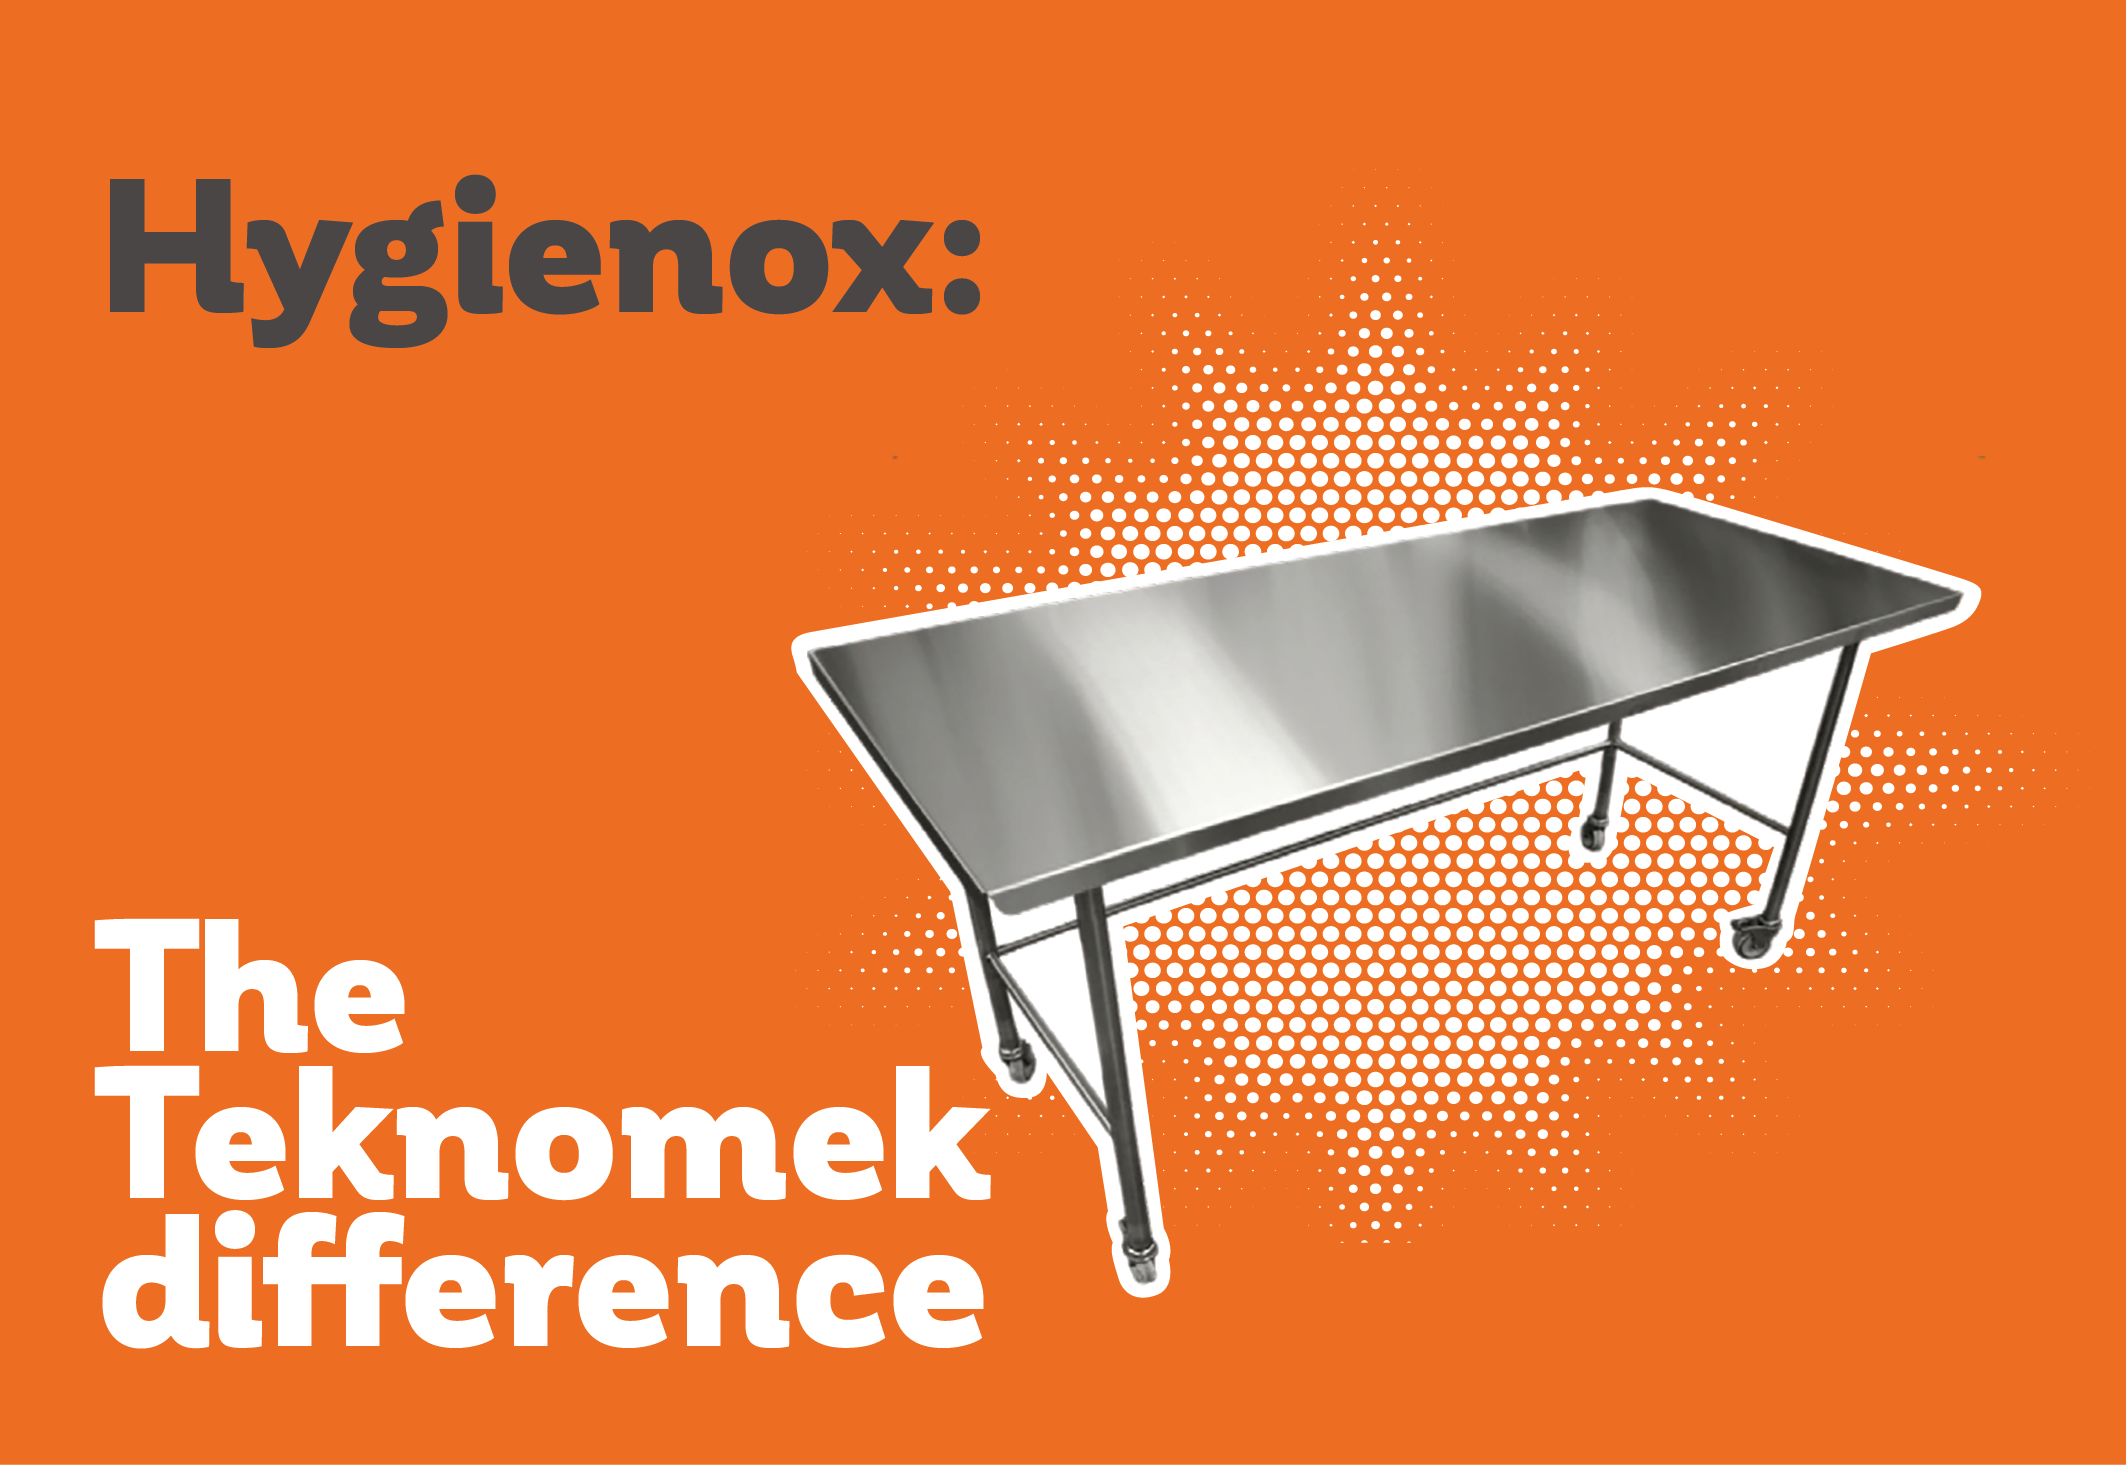 Hygienox: The Teknomek difference